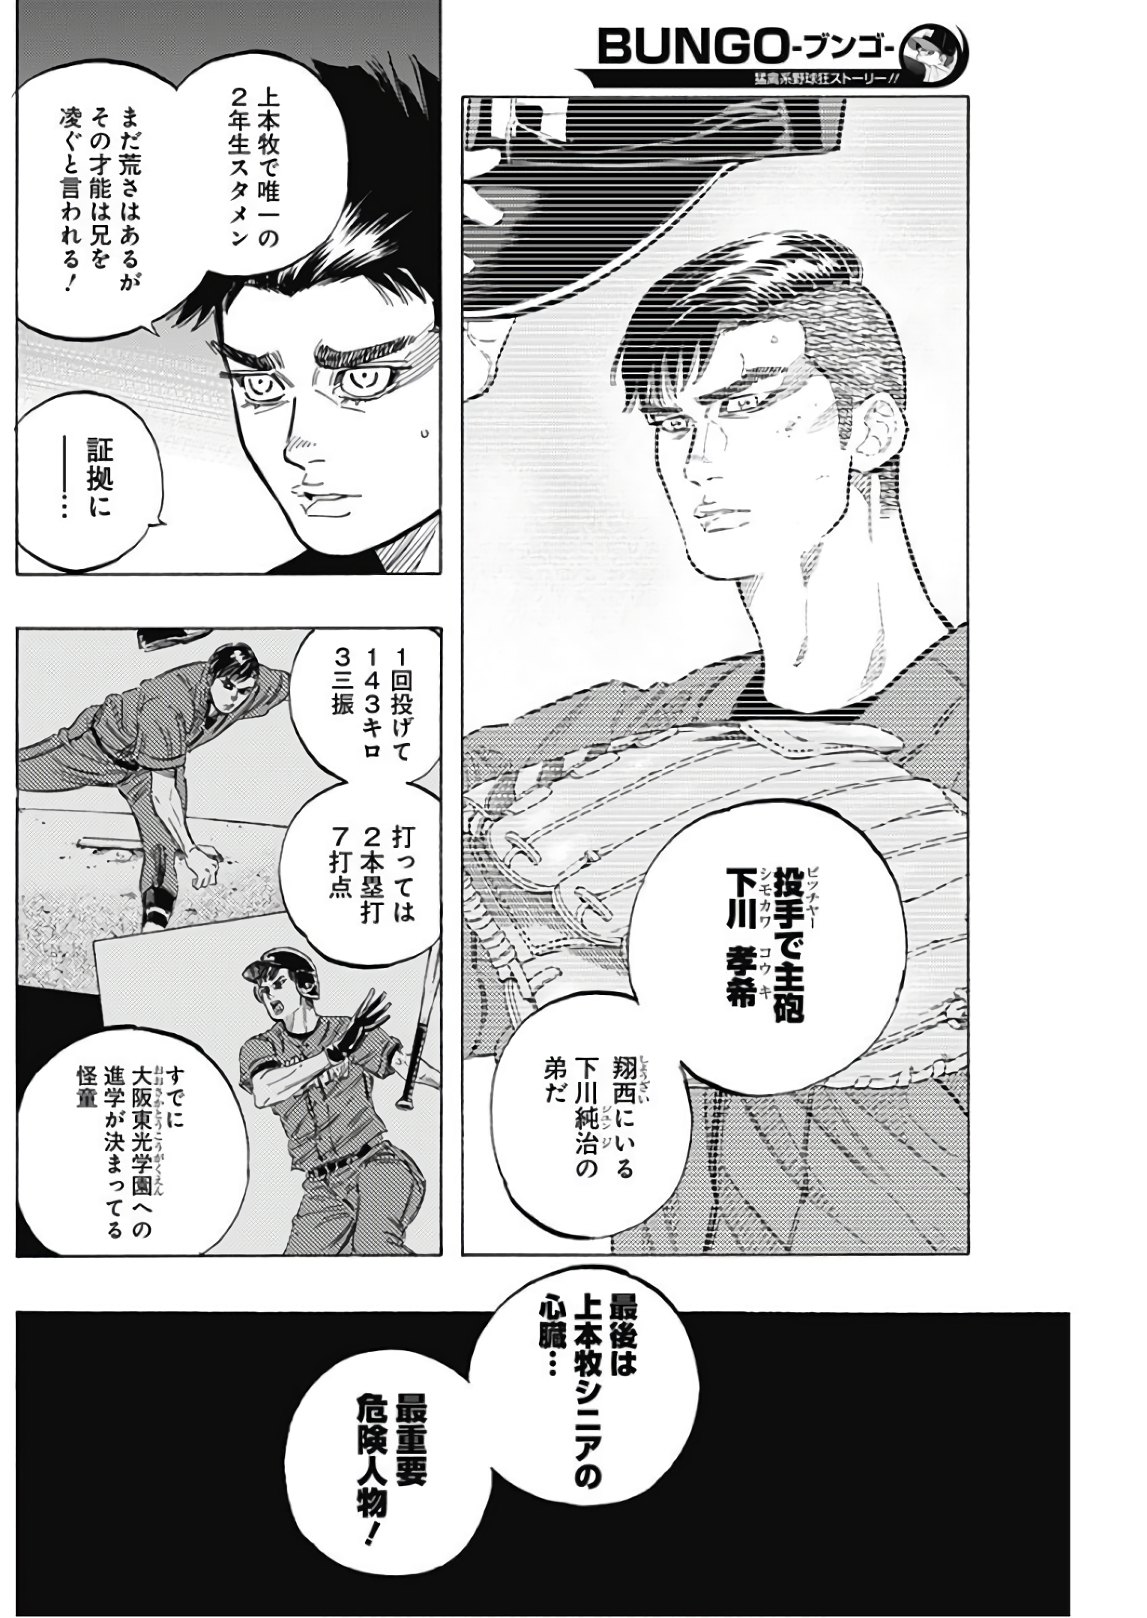 BUNGO-ブンゴ- 第153話 - Page 5